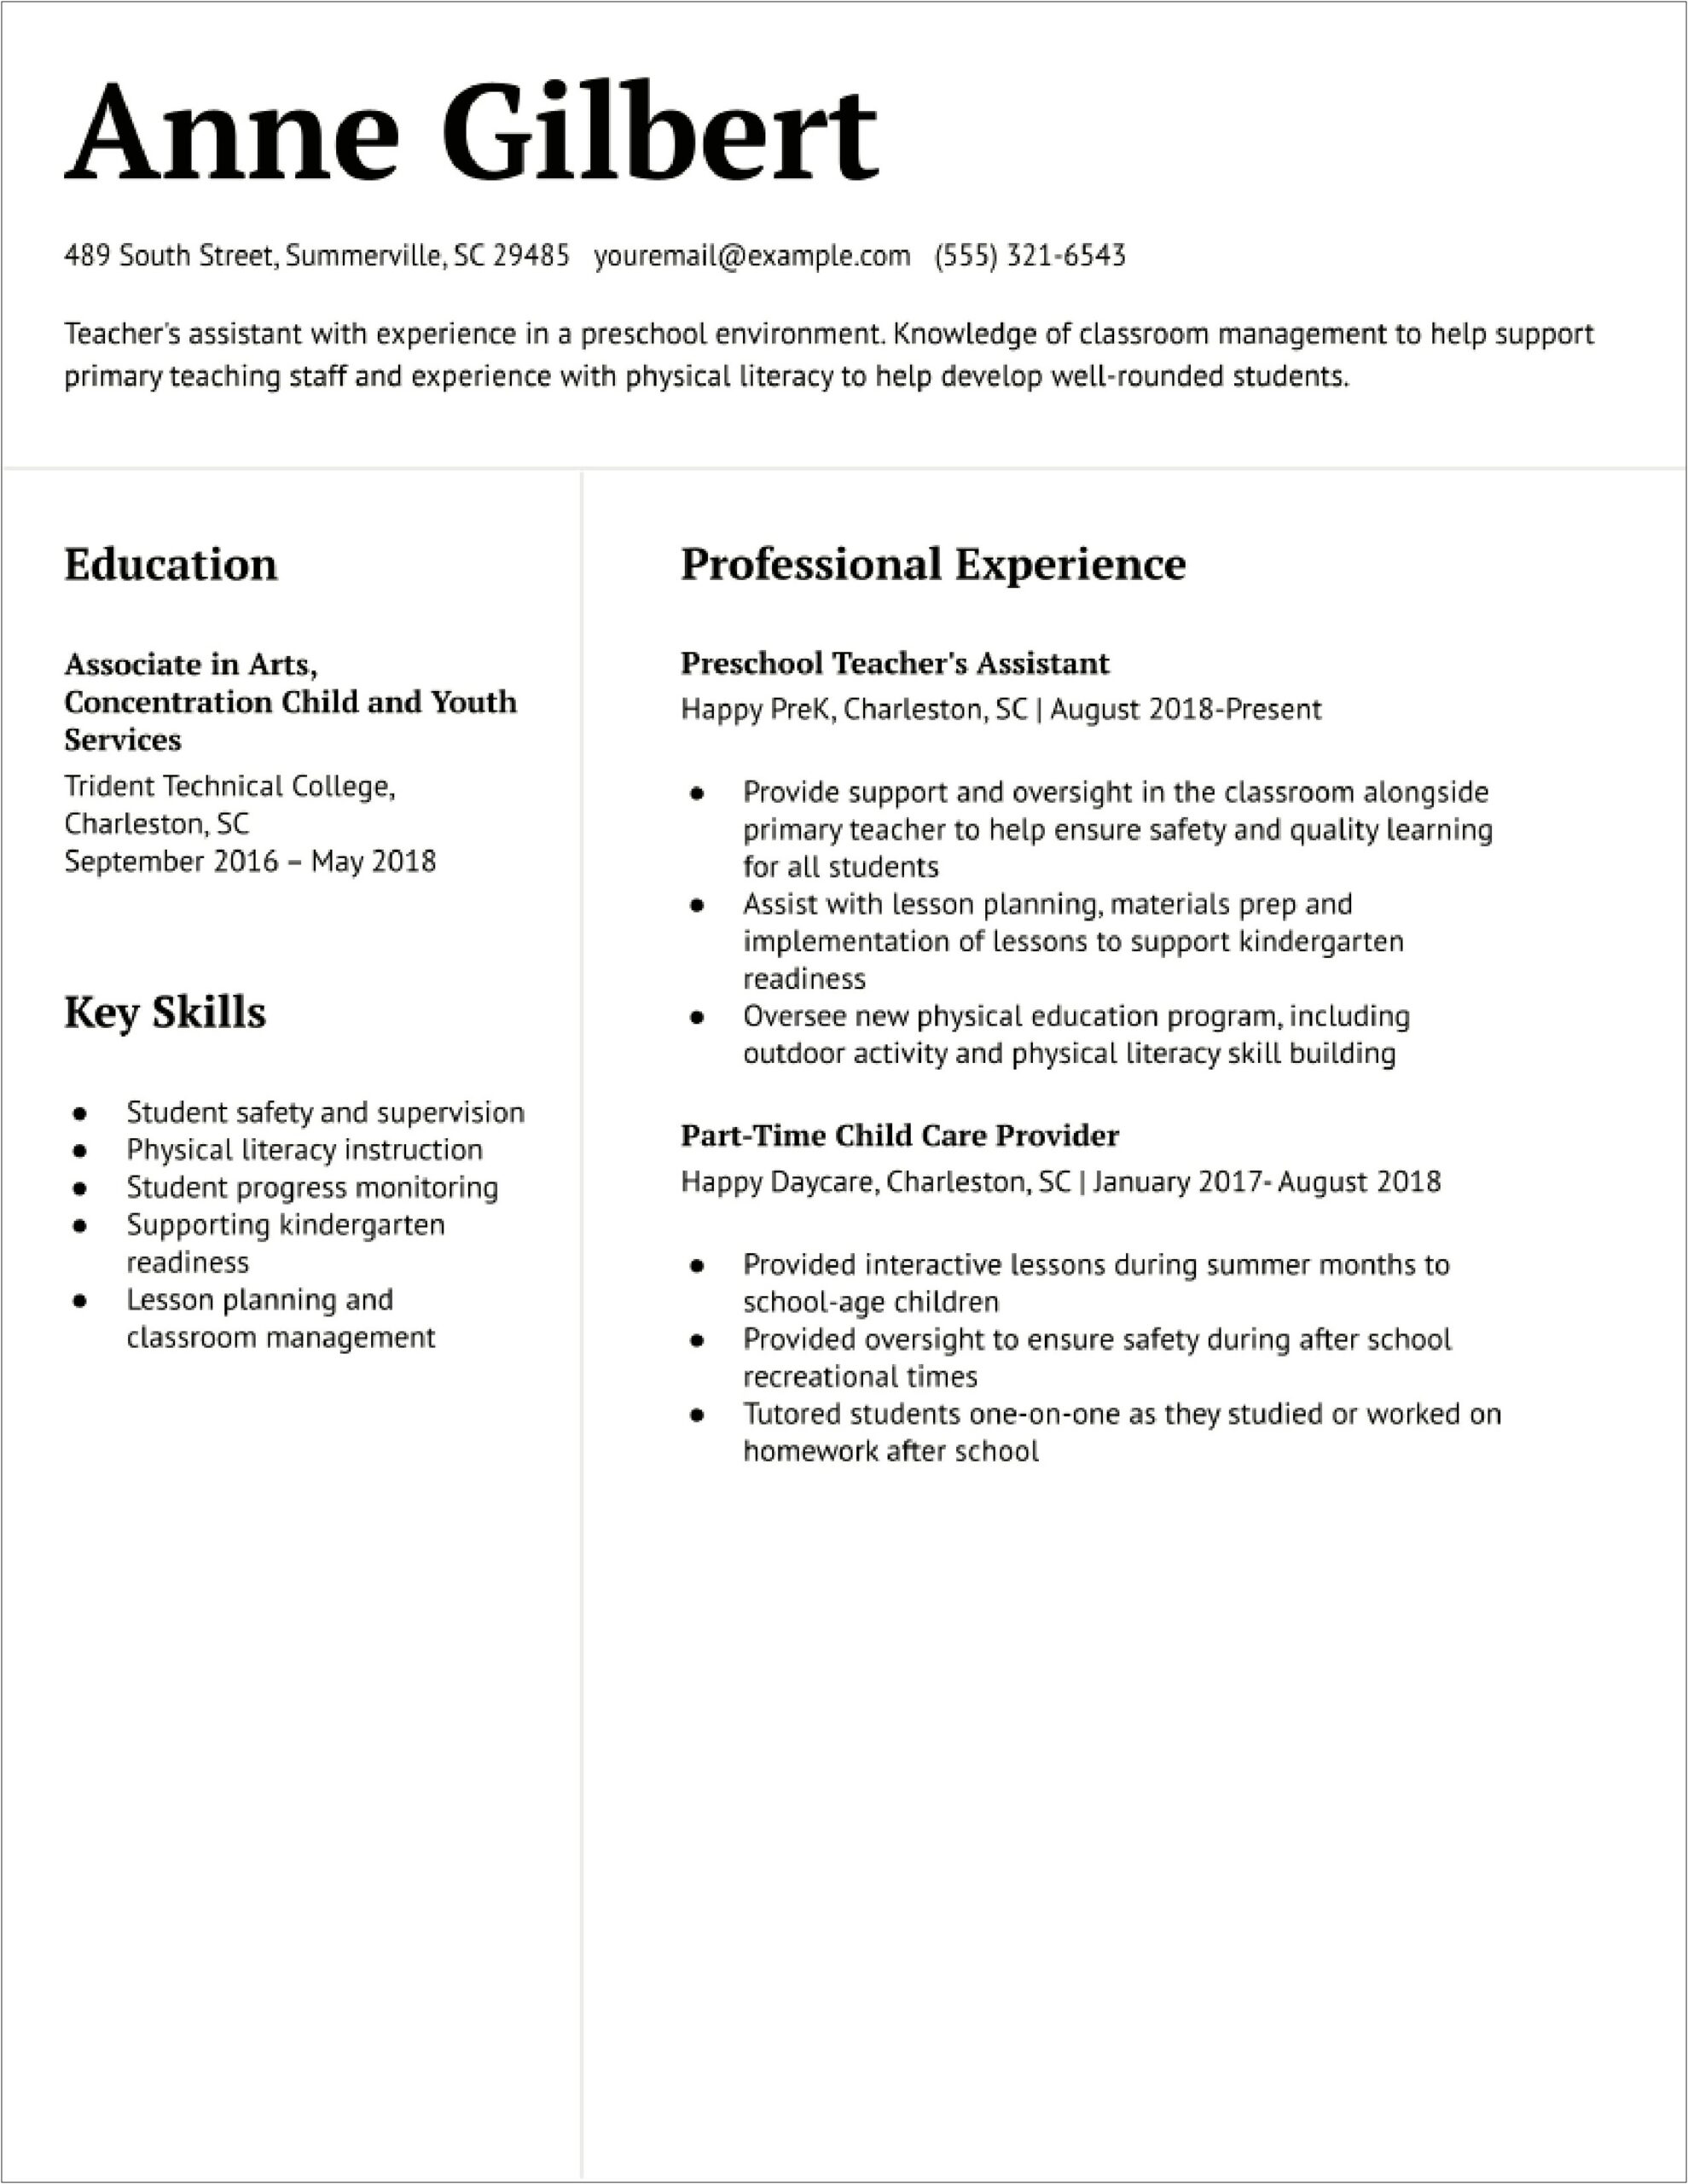 Resume Objective For A Preschool Teacher Aide